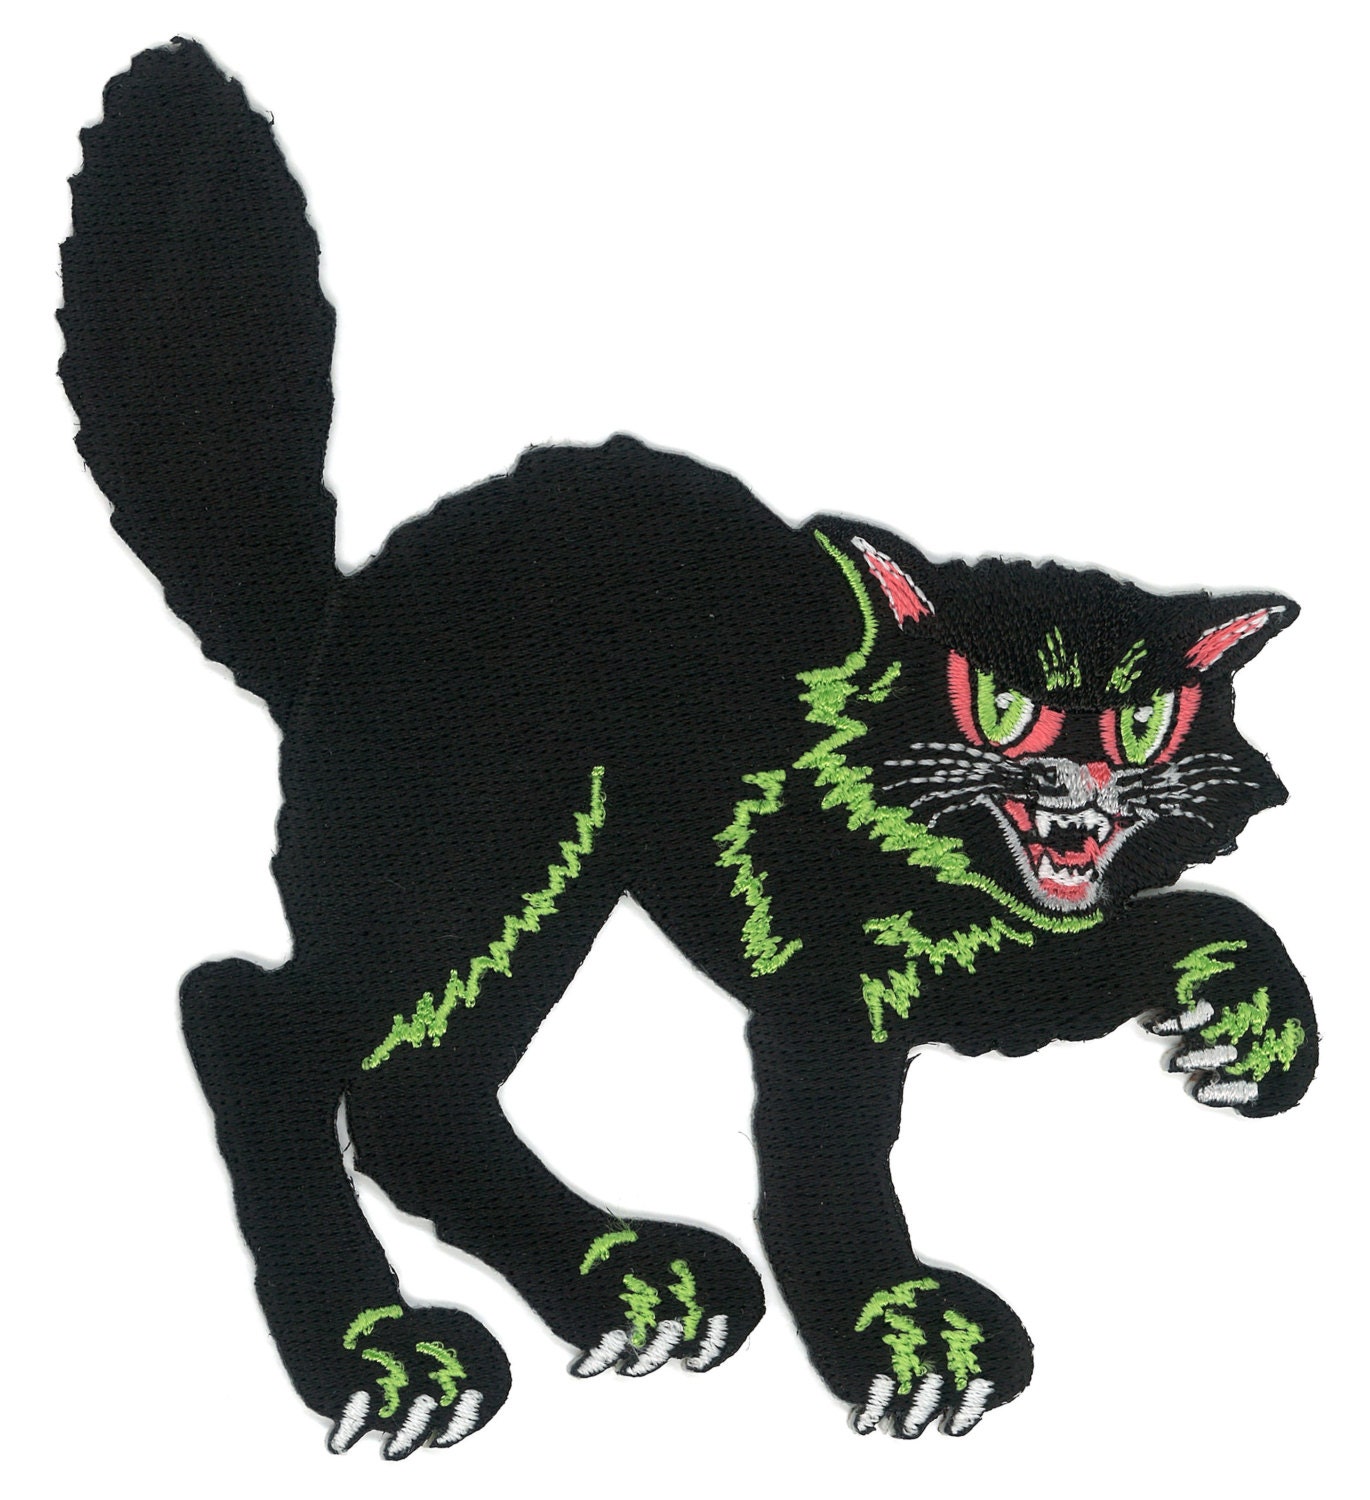 Vintage Halloween Black Cat Decoration